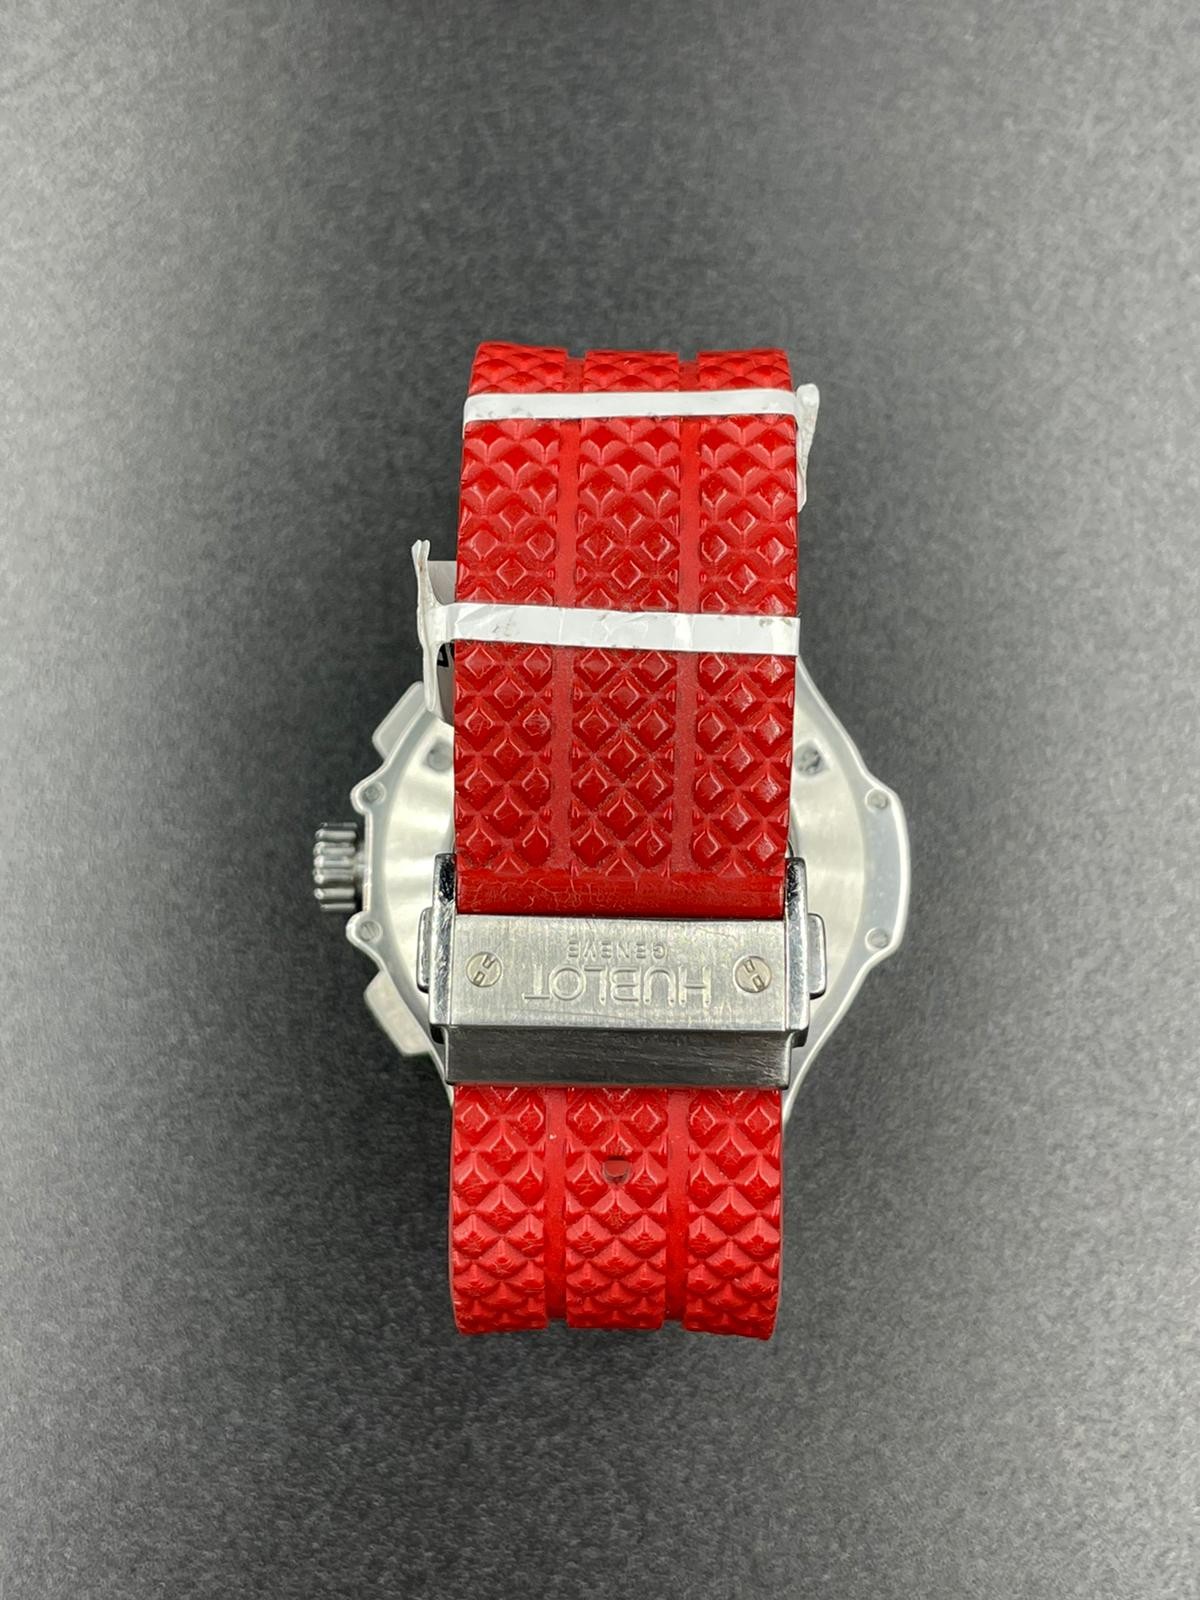 Hublot Big Bang chronometer watch with black face and original diamond dial - Image 5 of 5